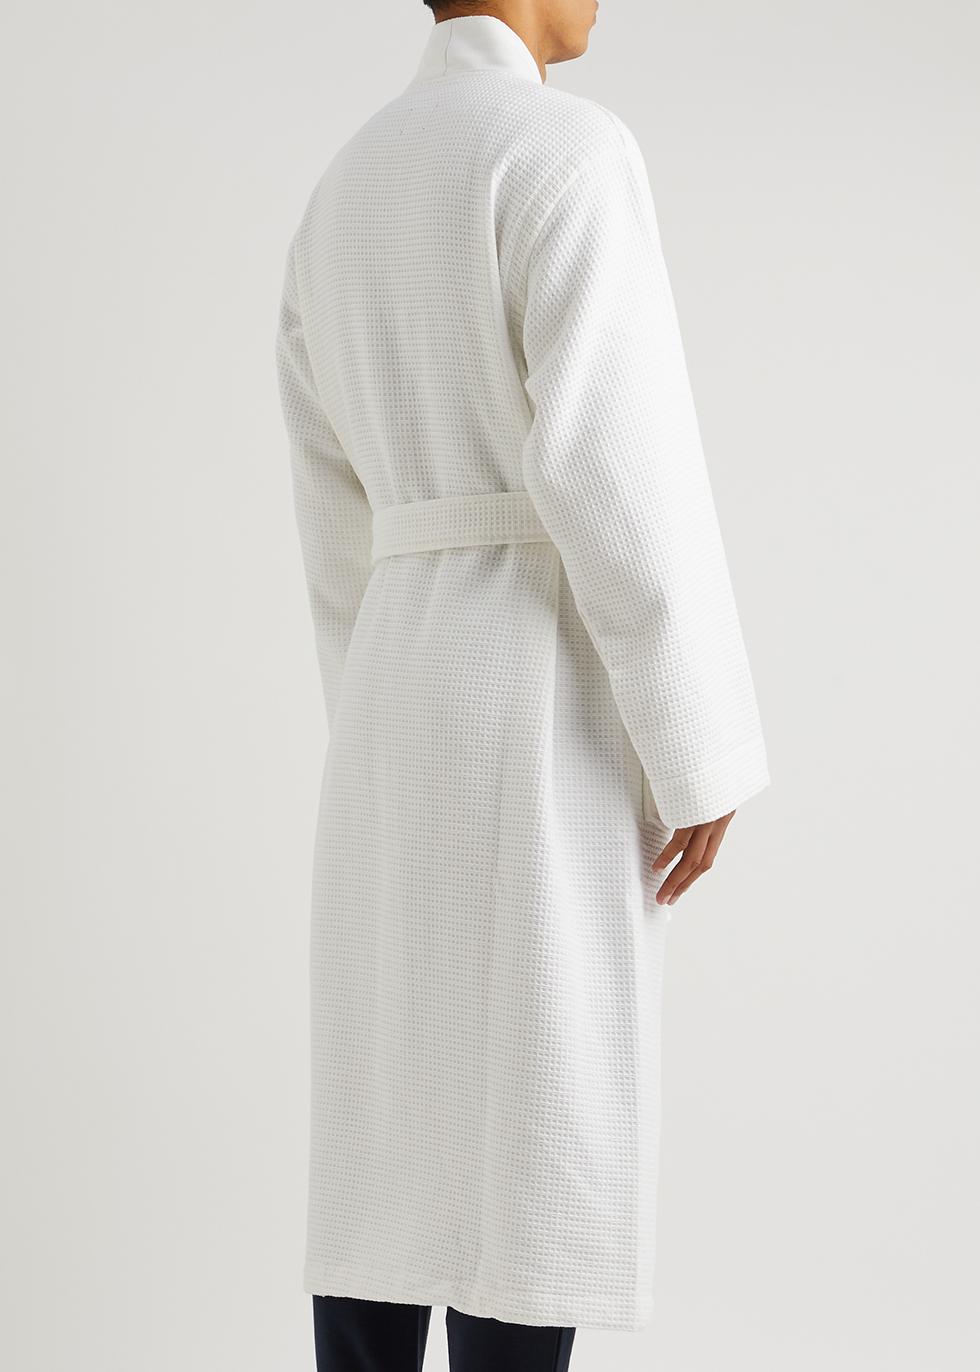 BOSS by HUGO BOSS Waffle-knit Cotton-blend Robe in White for Men | Lyst